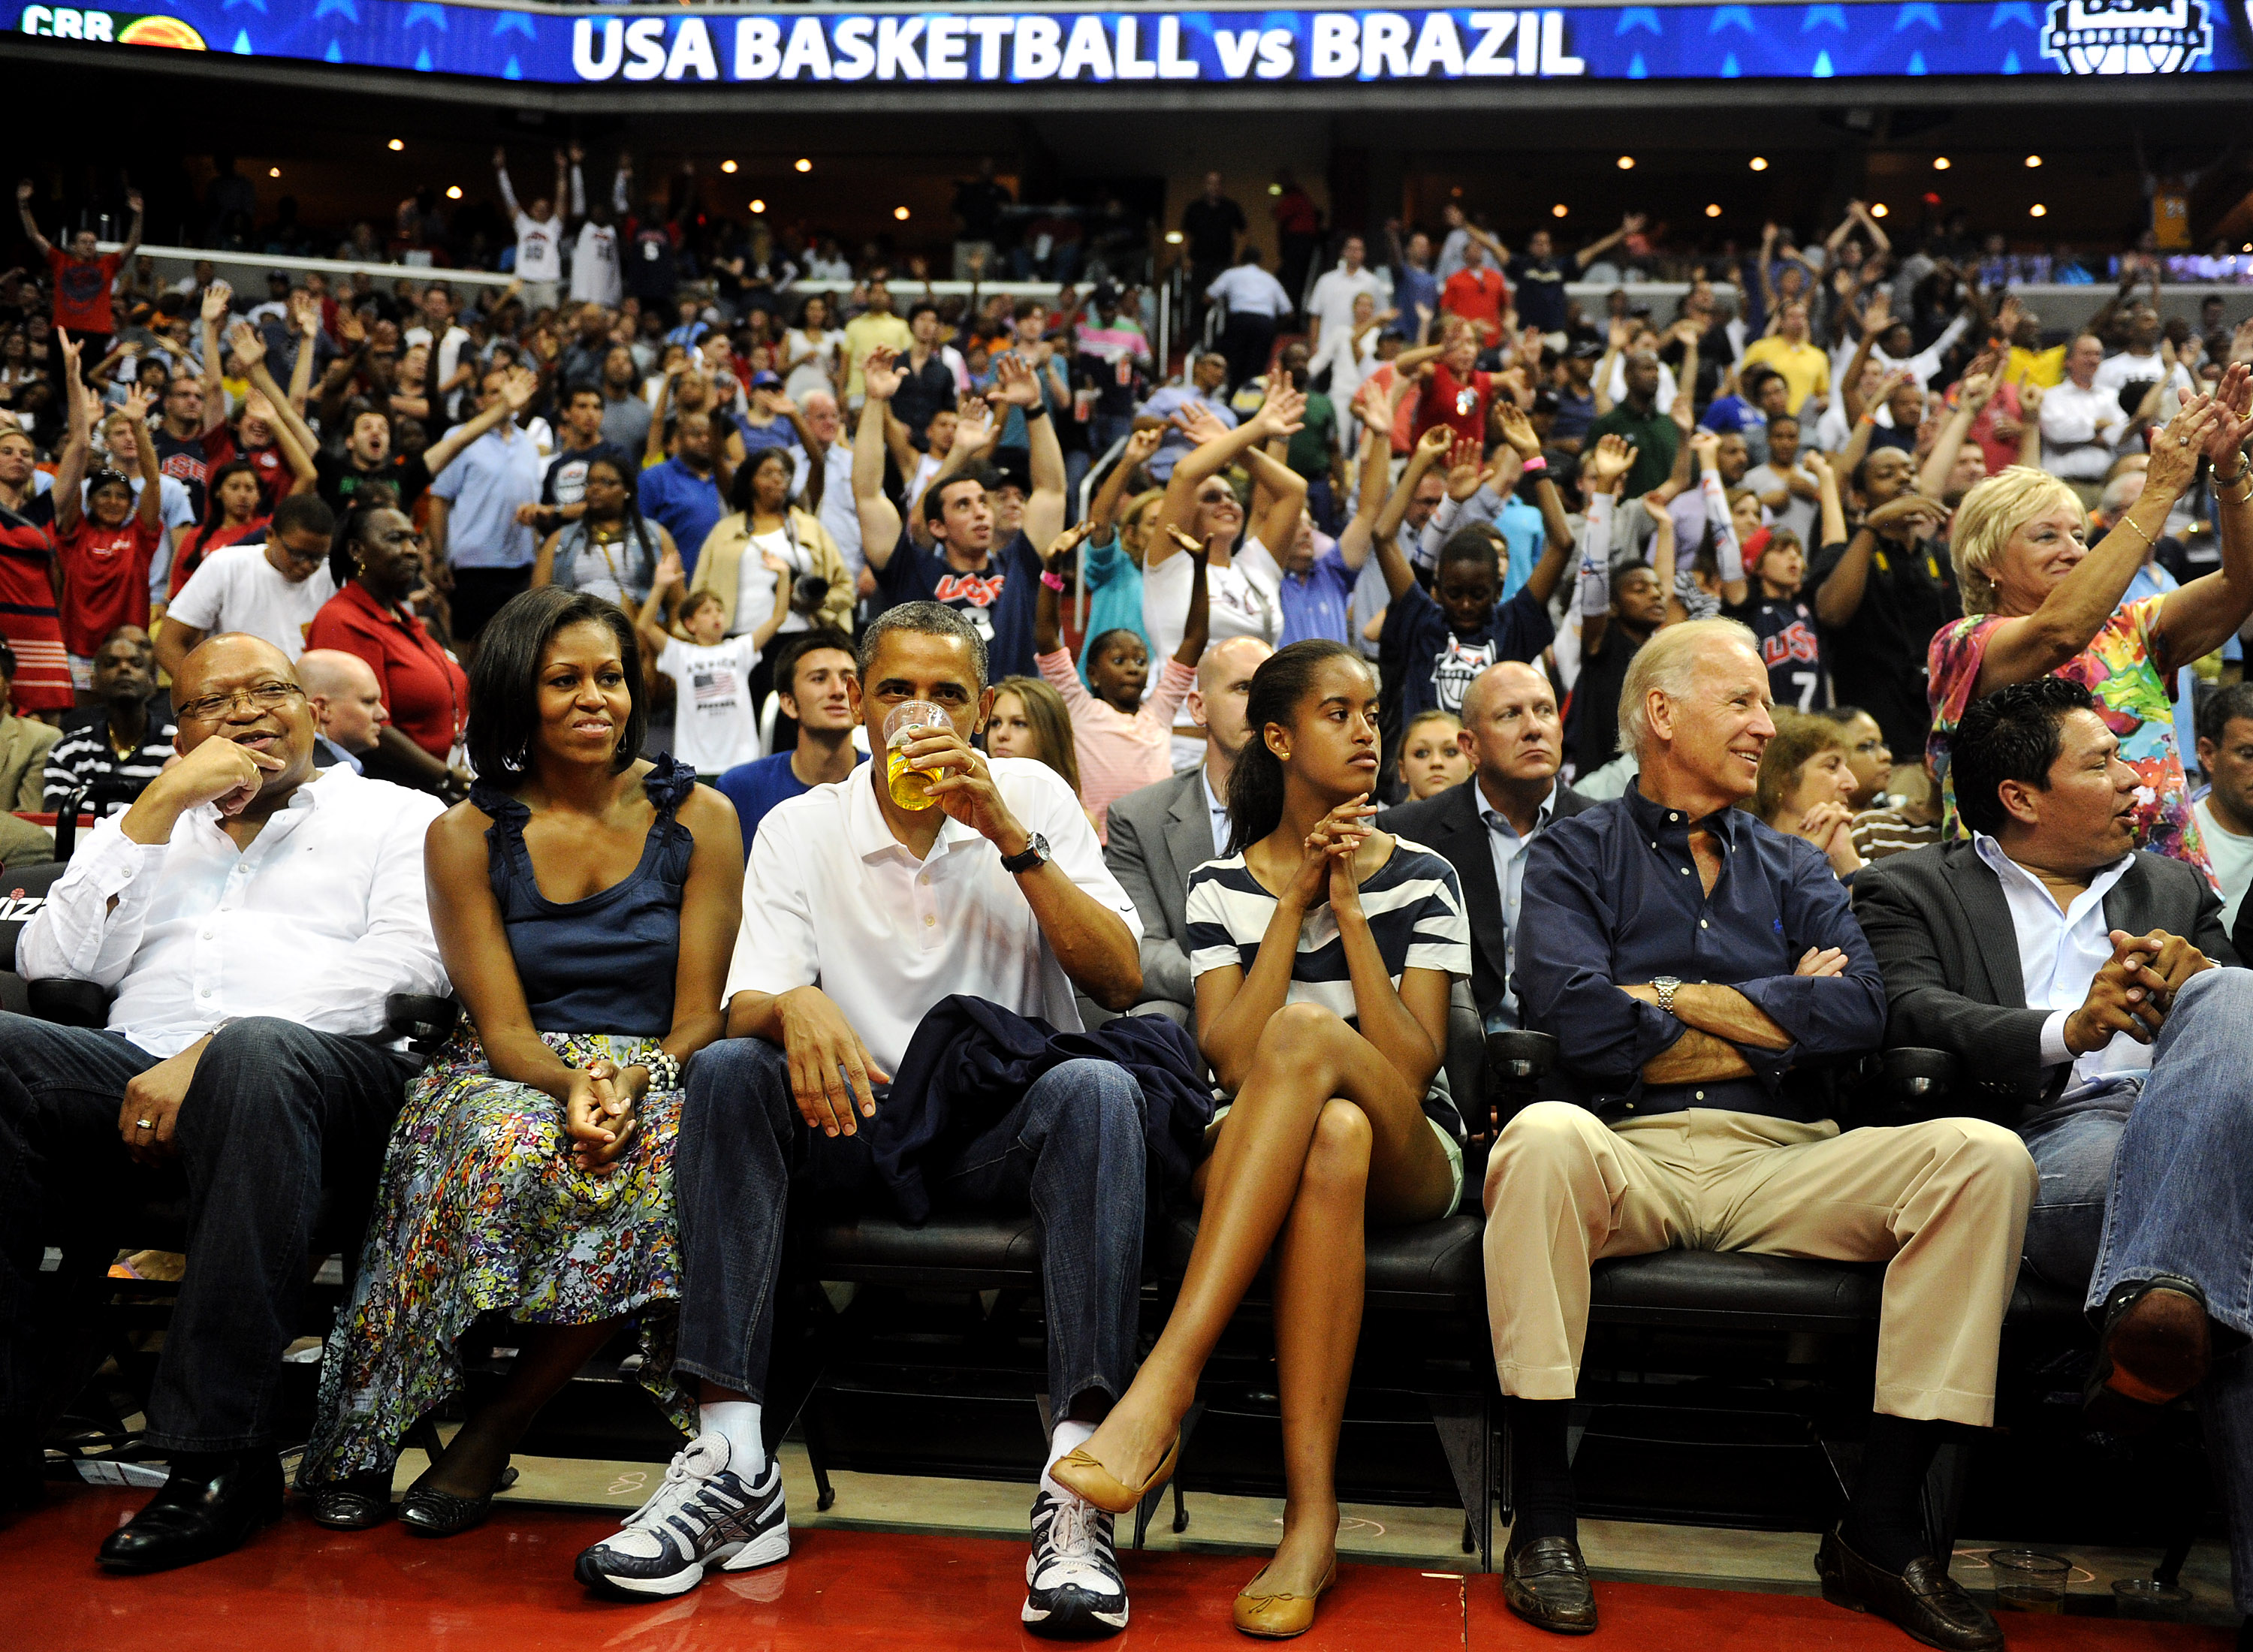 Barack Obama, Politik, Puss, President, Michelle Obama, basket, USA, Olympiska spelen